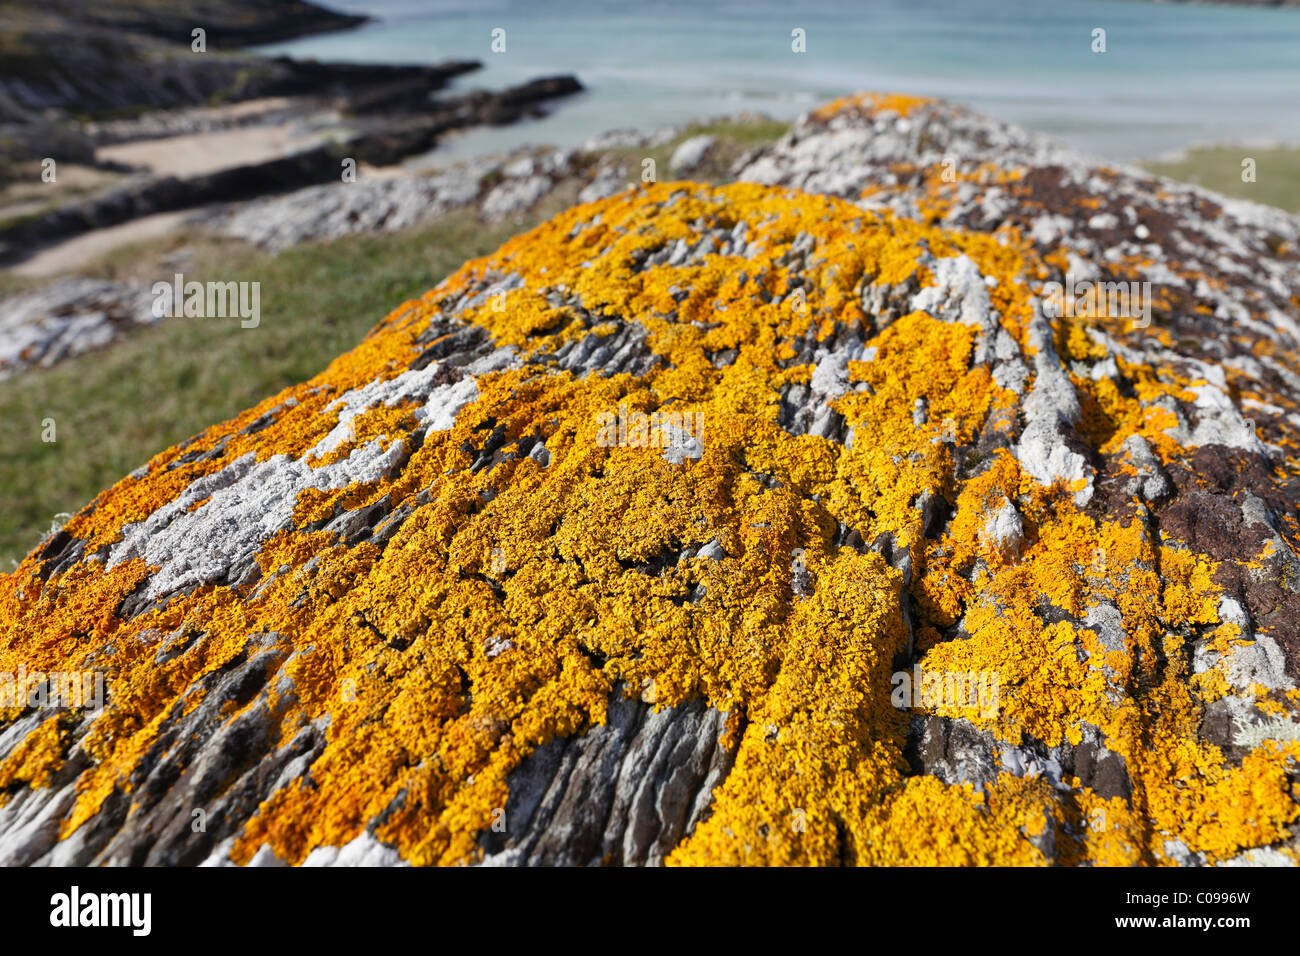 Yellow lichen on rock, Barley Cove, Mizen Head Peninsula, West Cork, Republic of Ireland, British Isles, Europe Stock Photo